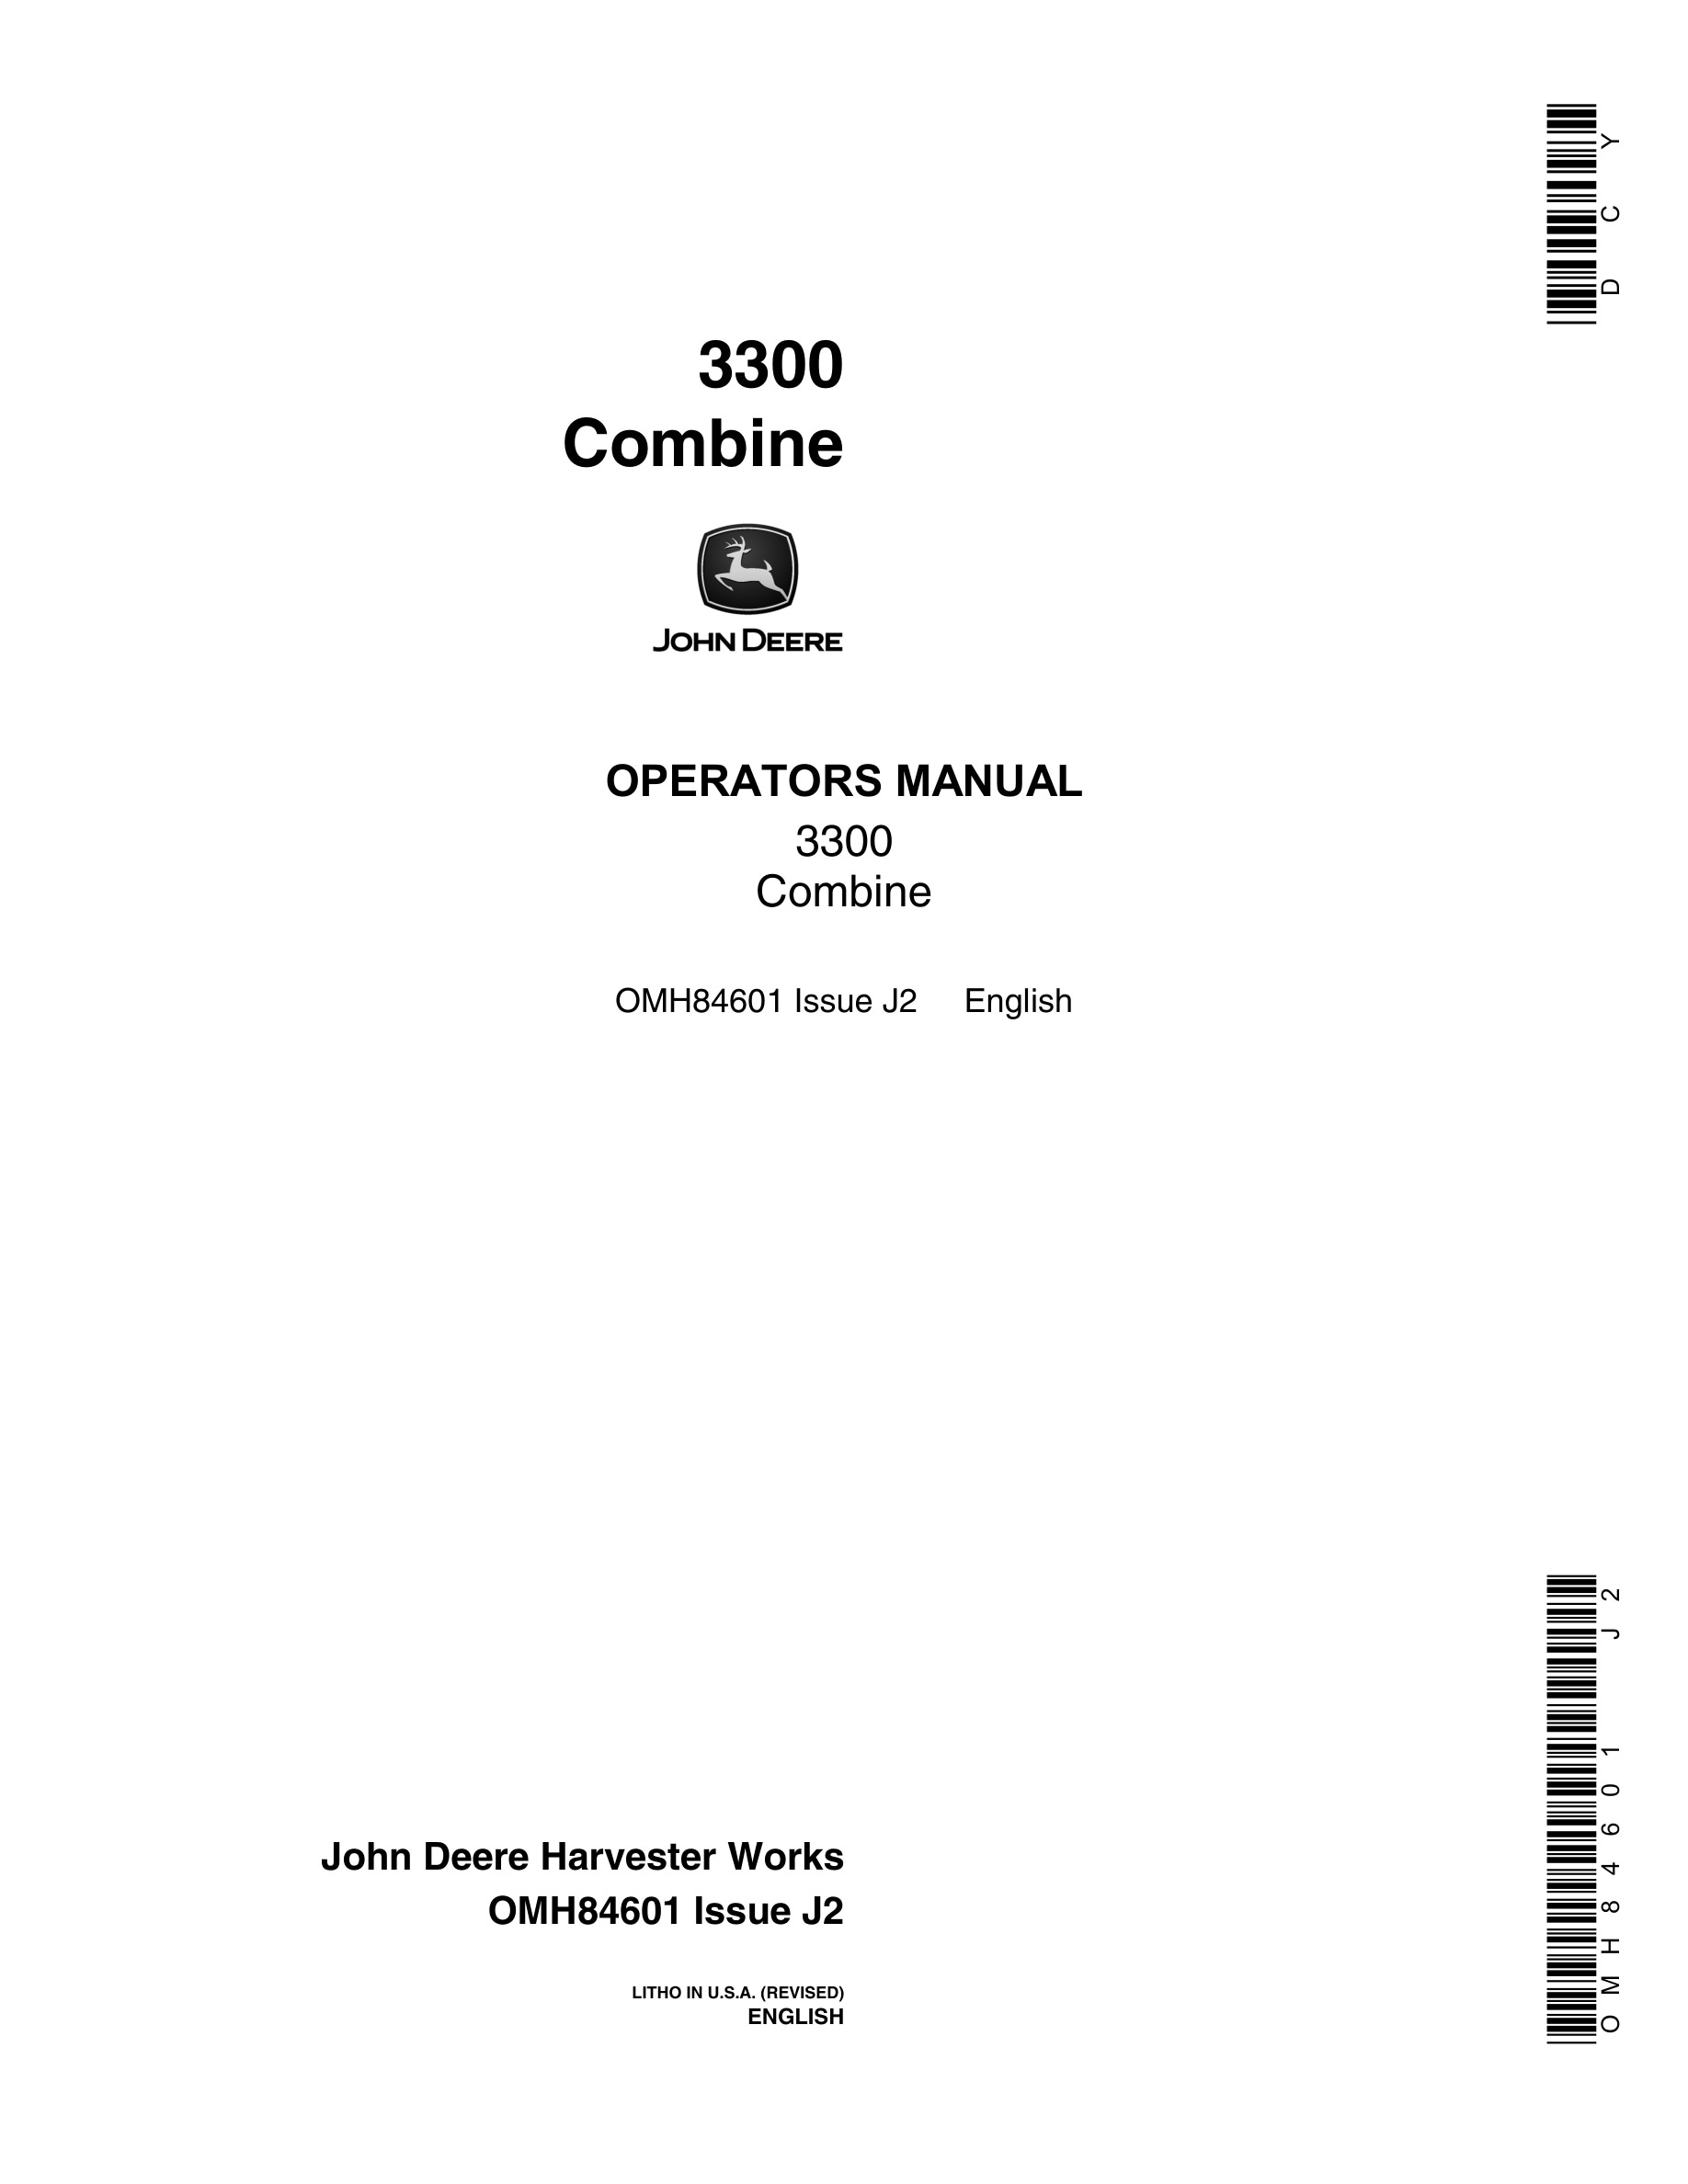 John Deere 3300 Combine Operator Manual OMH84601-1